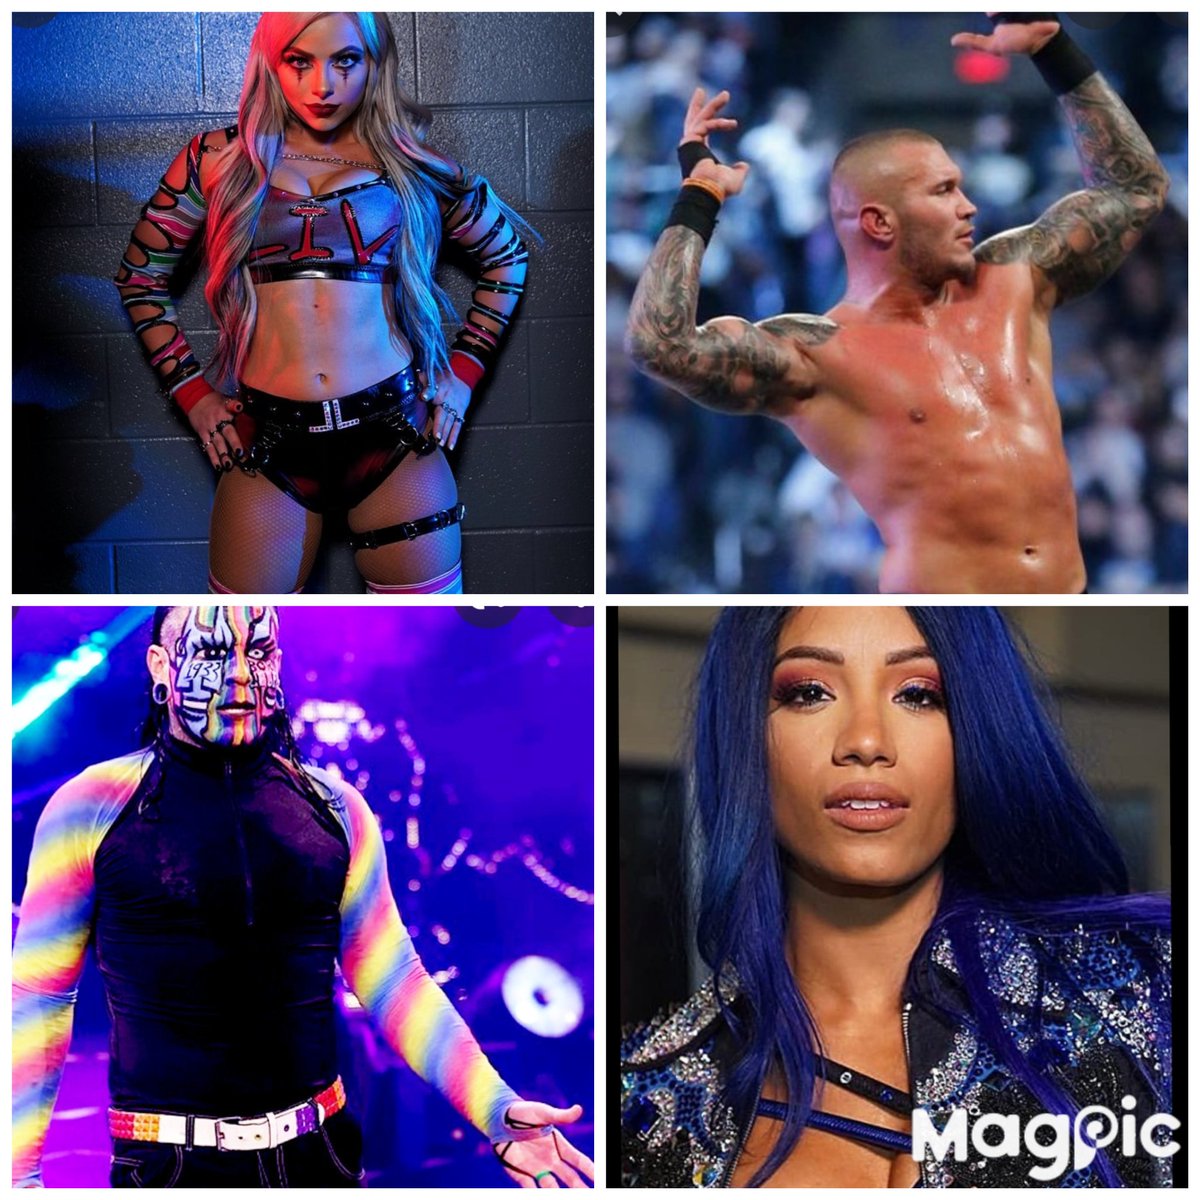 Liv Morgan, Sasha bank's randy orton, Jeff hardy @Venomjr2002 has signed their contract with nightmare wrestling https://t.co/Uu2f5aeg2h